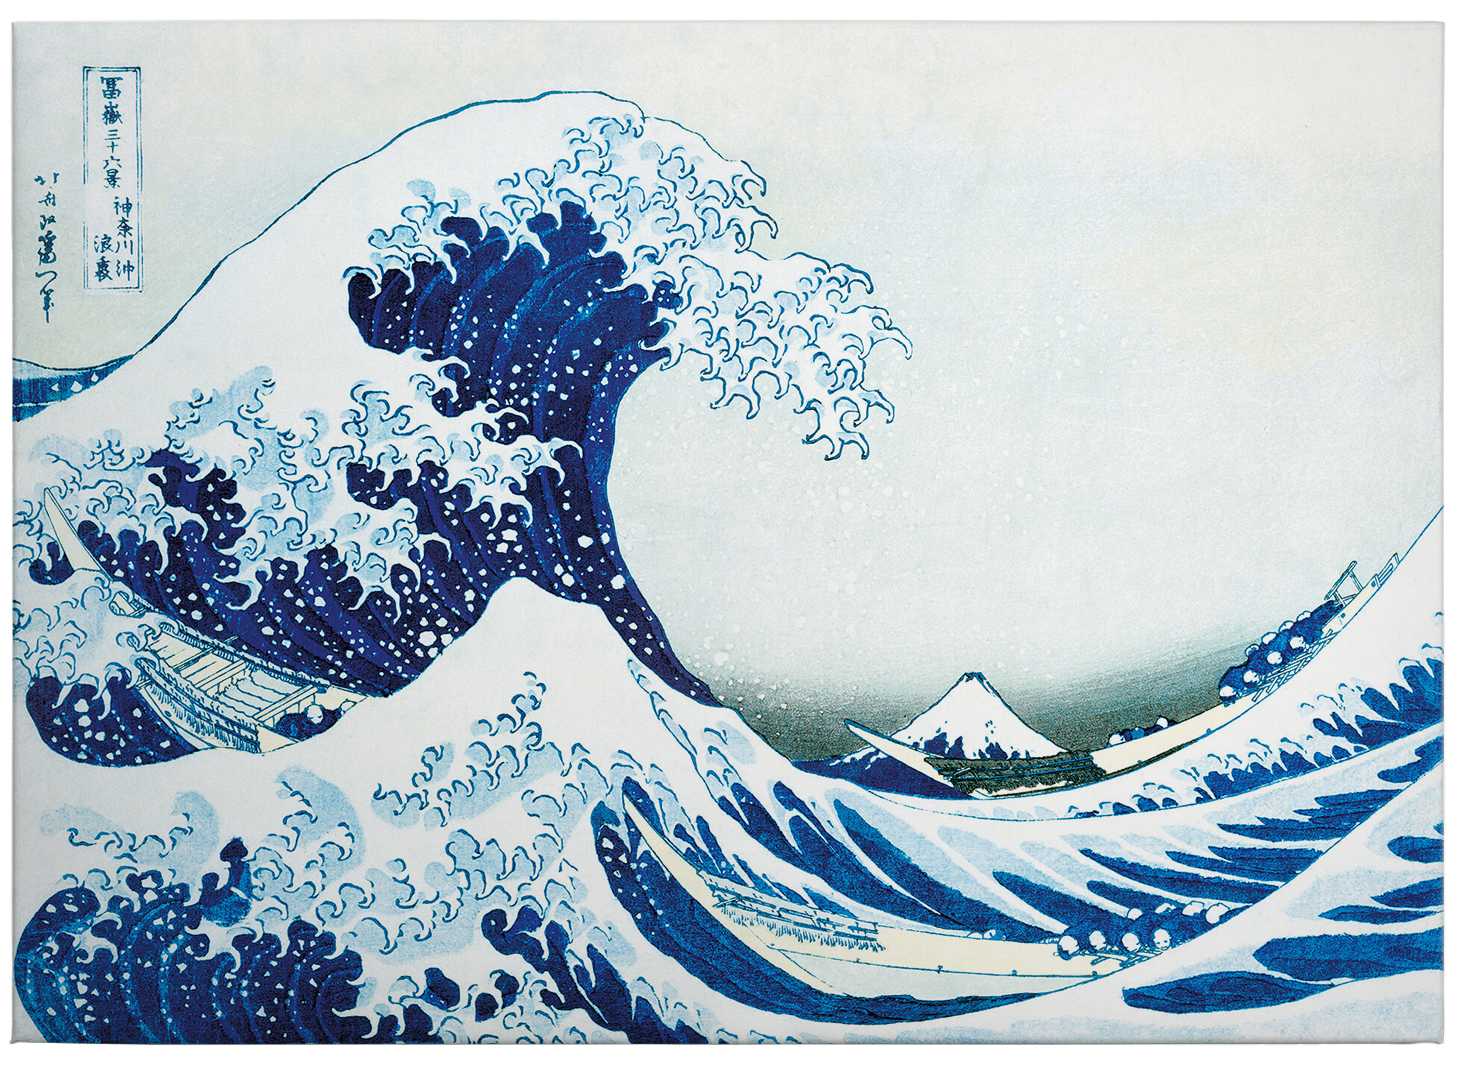             Lienzo "La gran ola de Kanagawa" de Hokusai - 0,70 m x 0,50 m
        